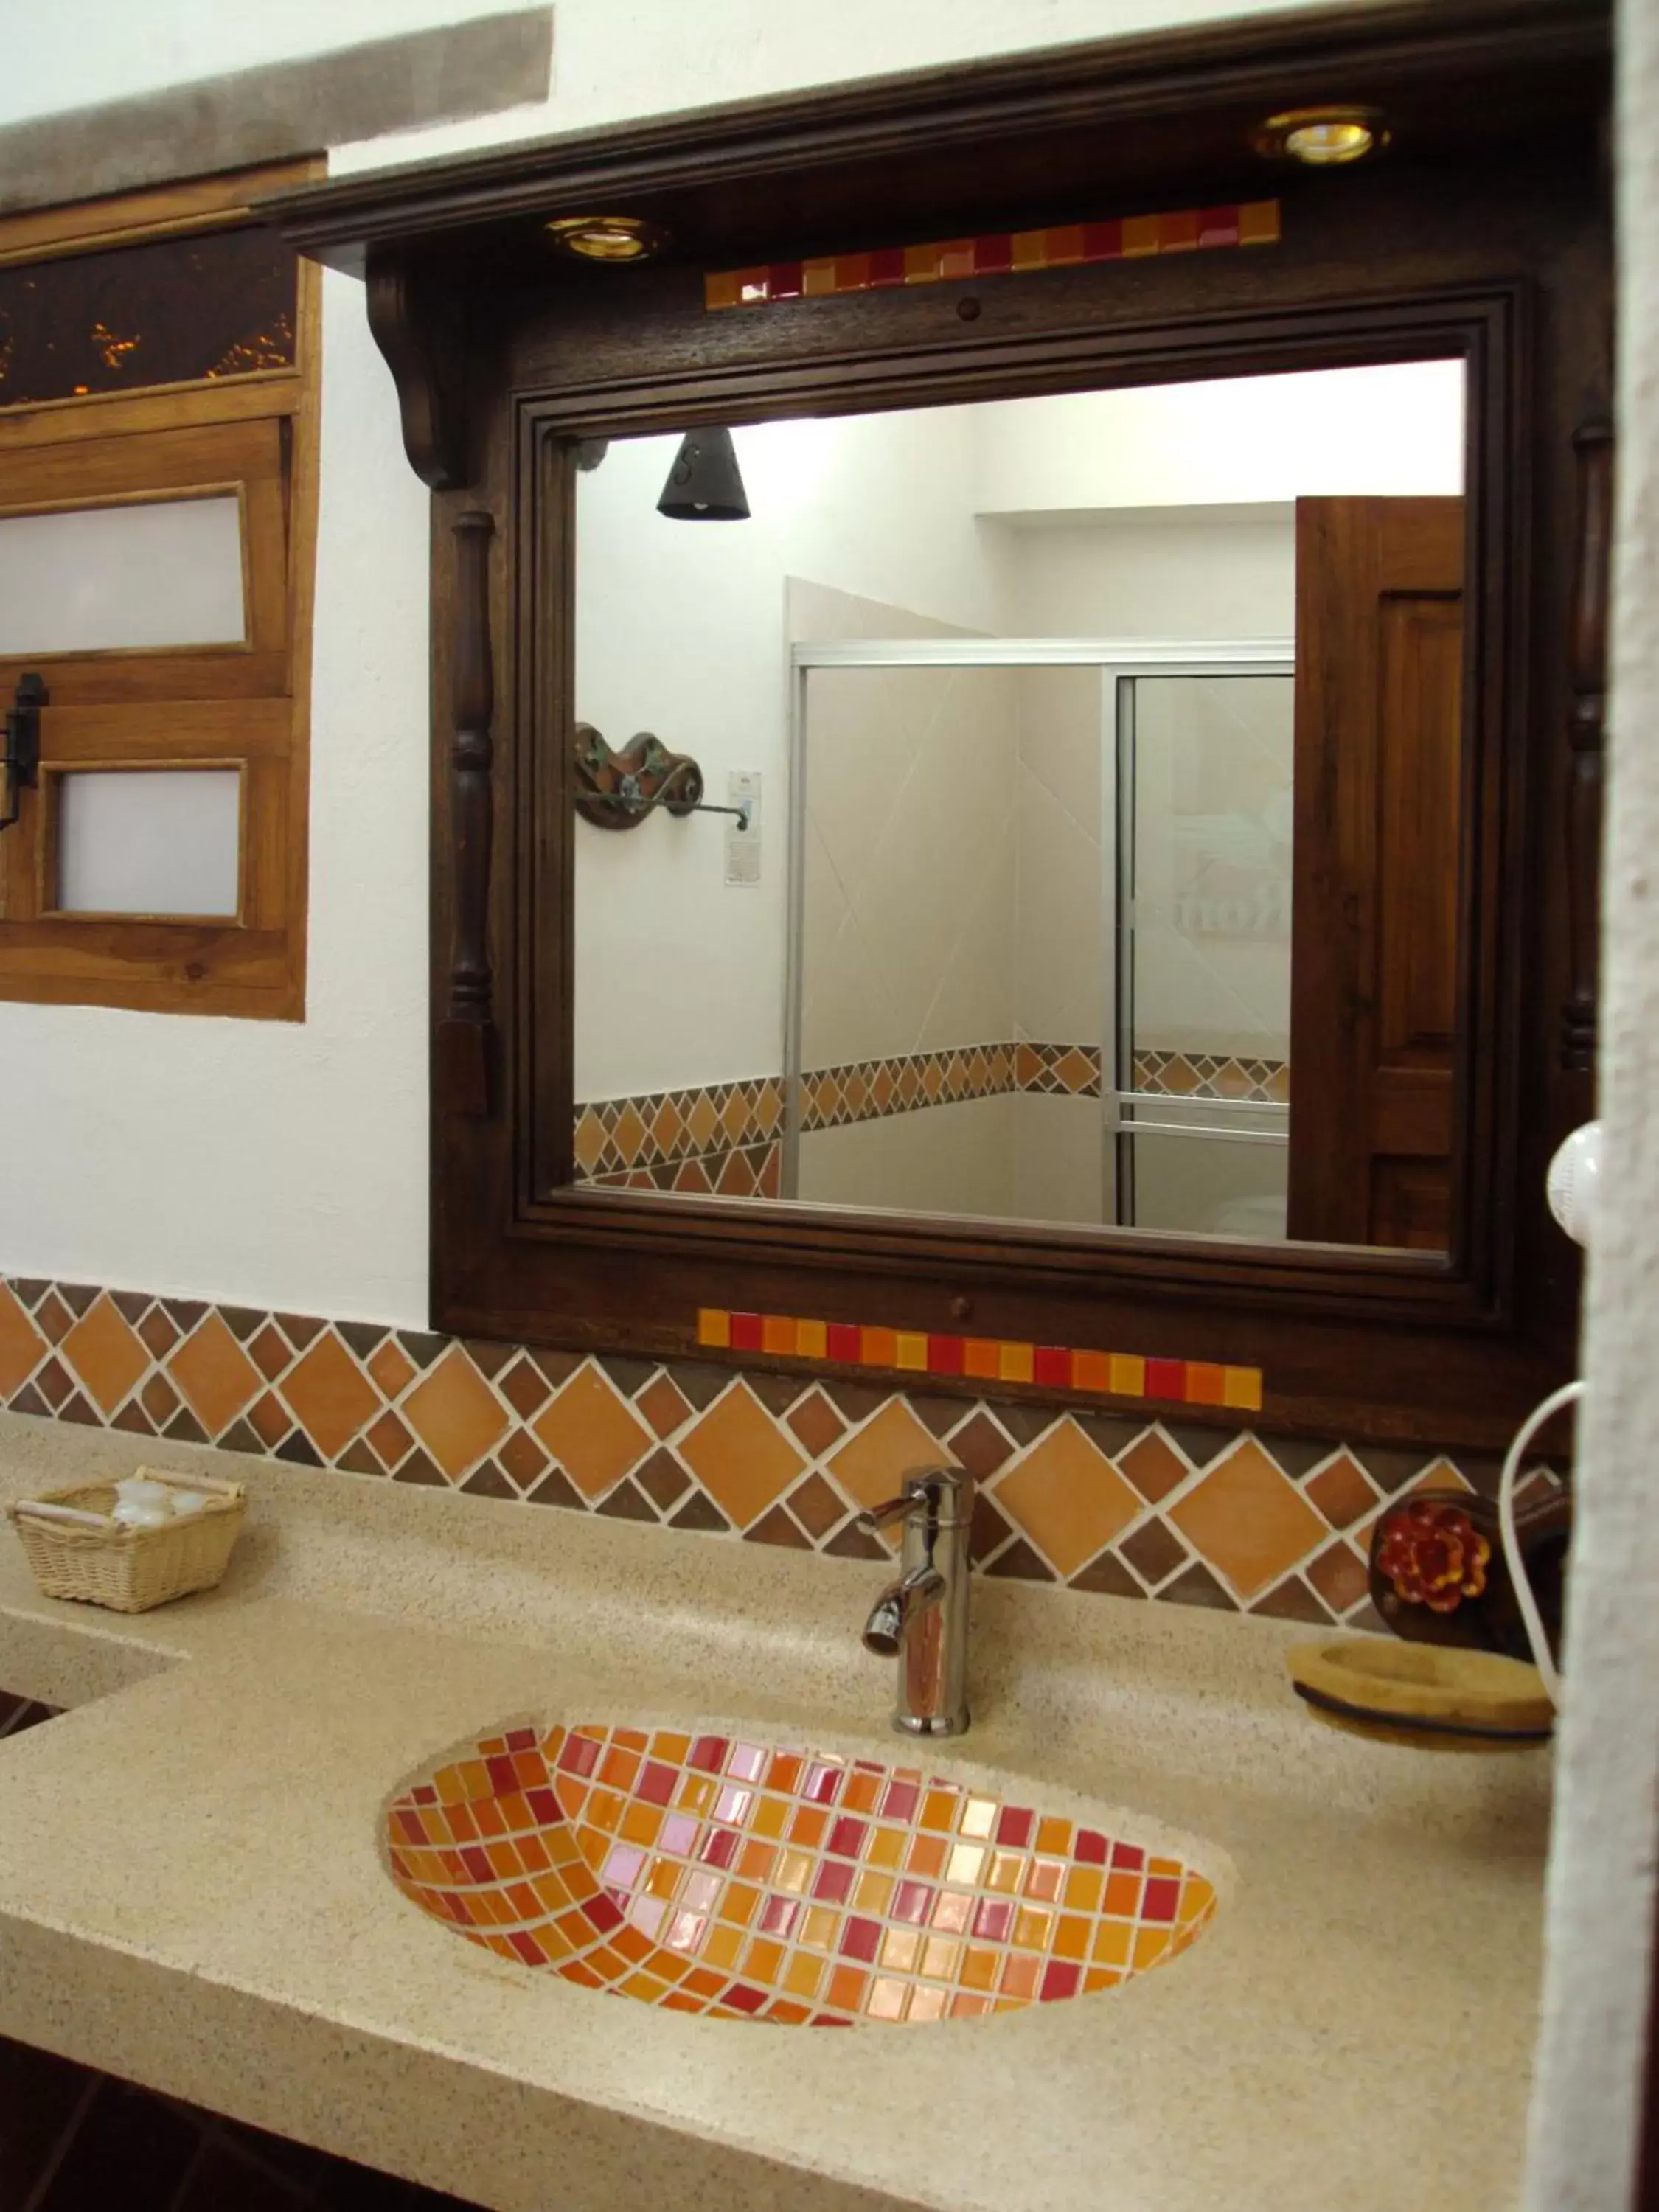 Bathroom in Hotel Boutique Villa Roma